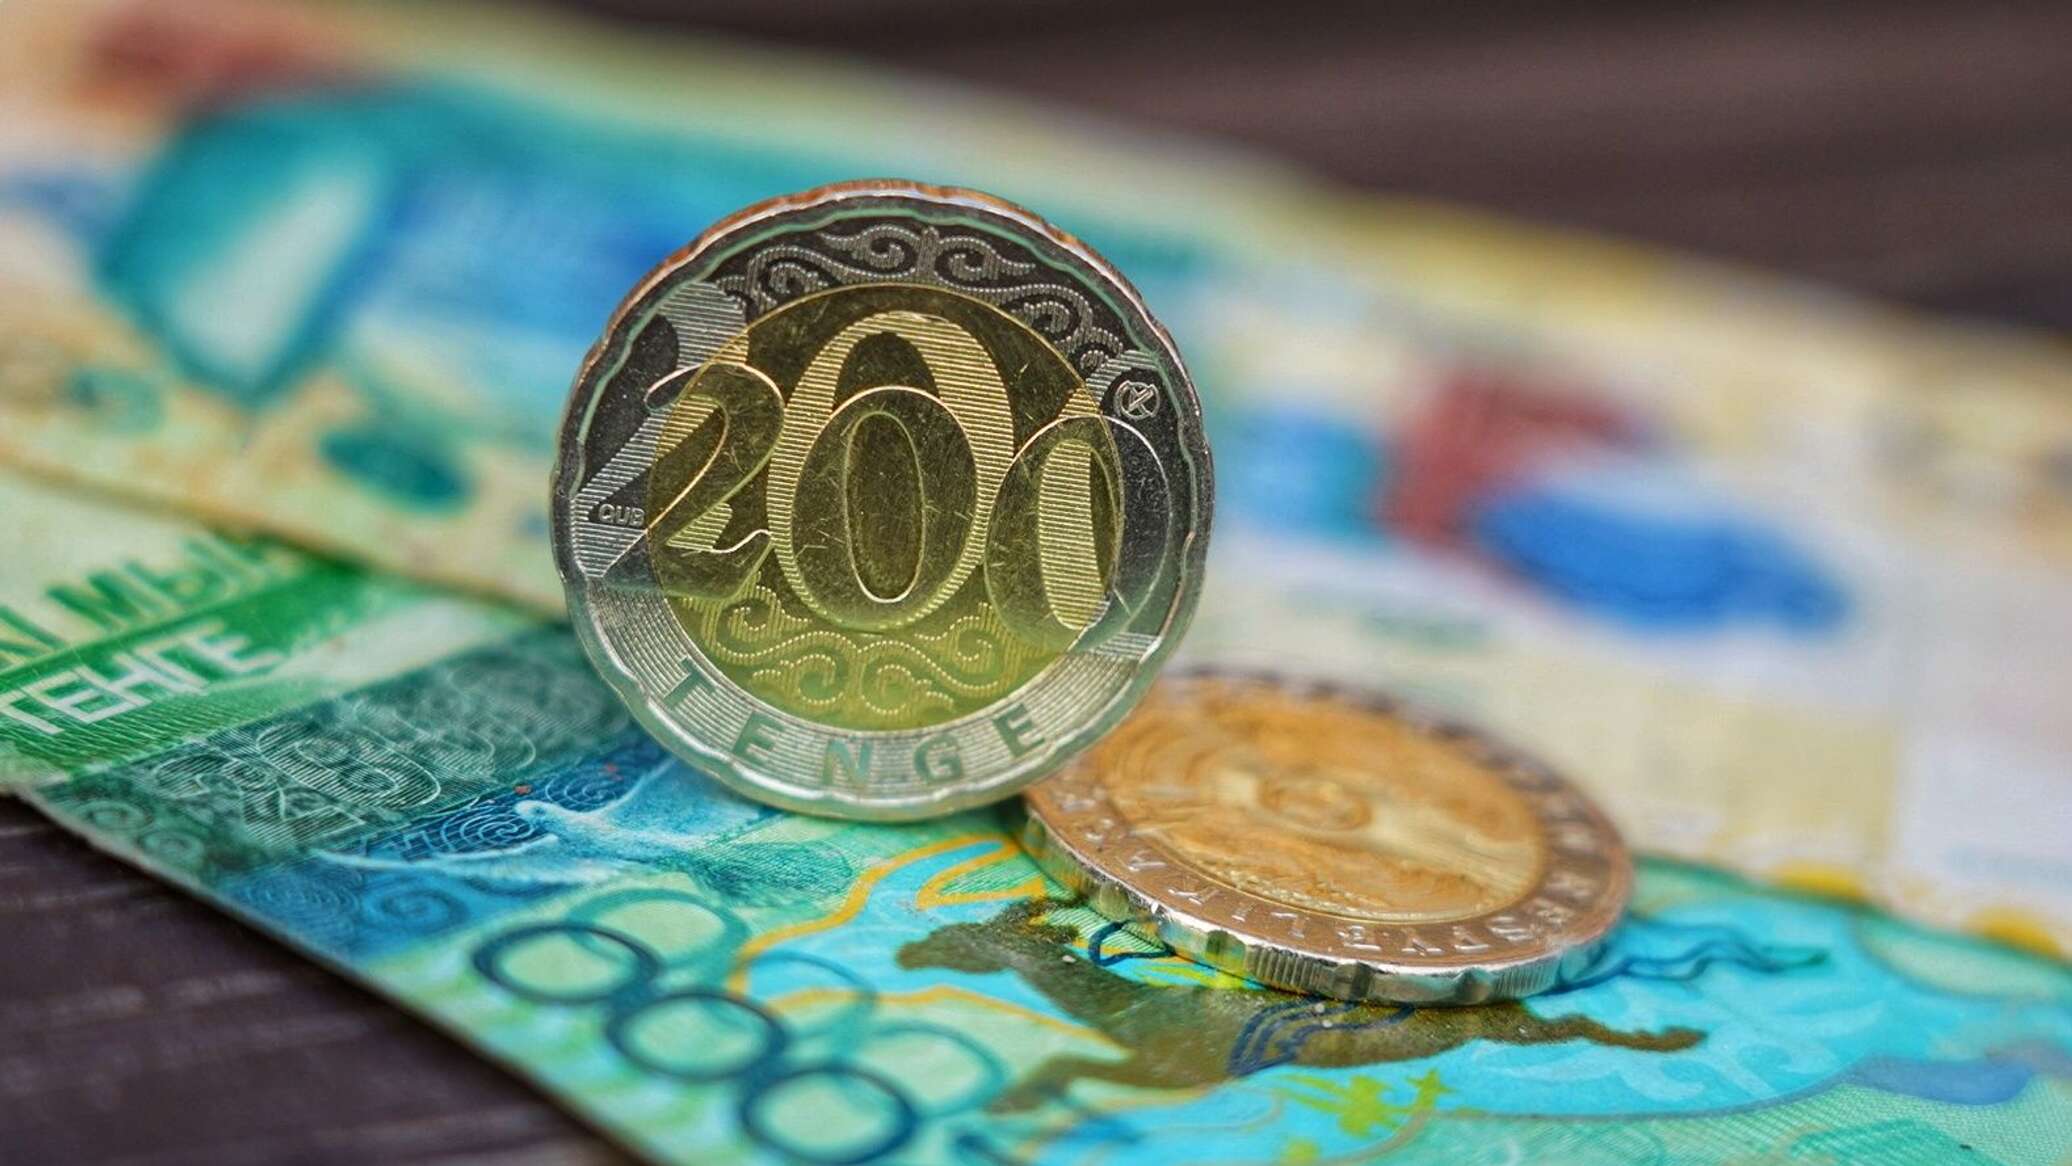 Ақша алу. Тенге. Деньги Казахстана. Национальная валюта Казахстана. Казахские деньги тенге.